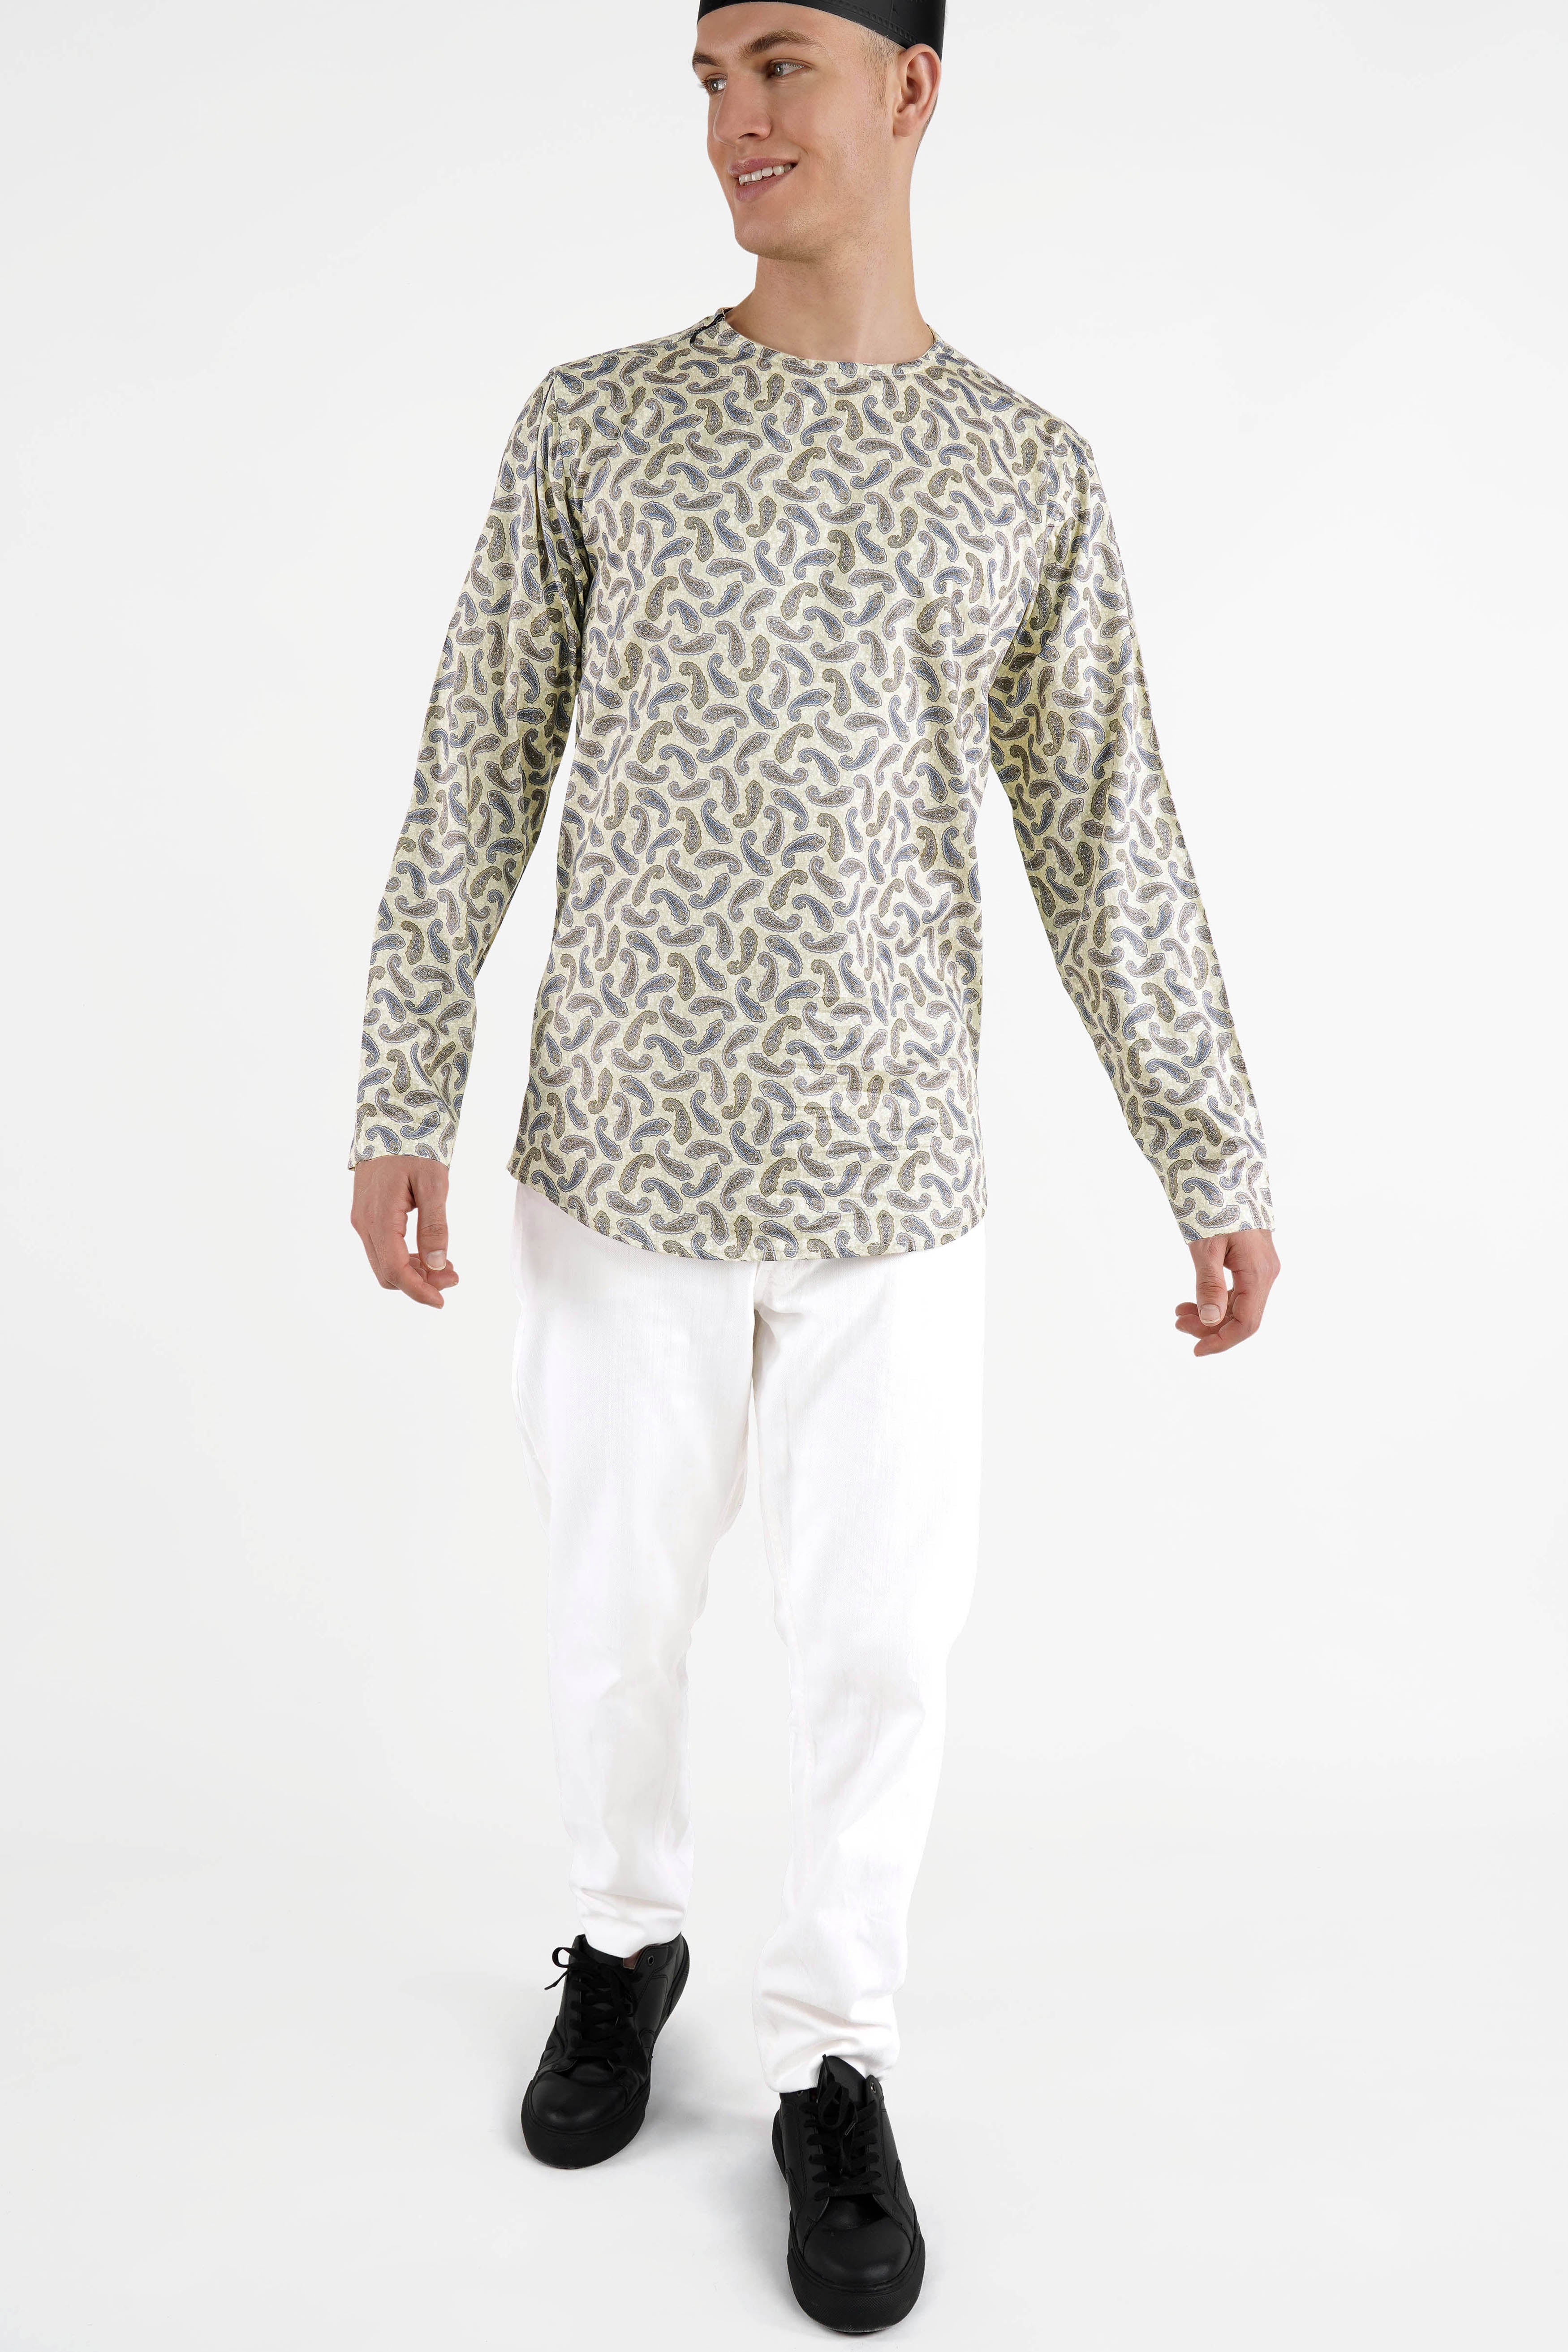 Hampton Yellow with Multicoloured Paisley Printed Shoulder Zipper Closer Premium Cotton Designer Shirt